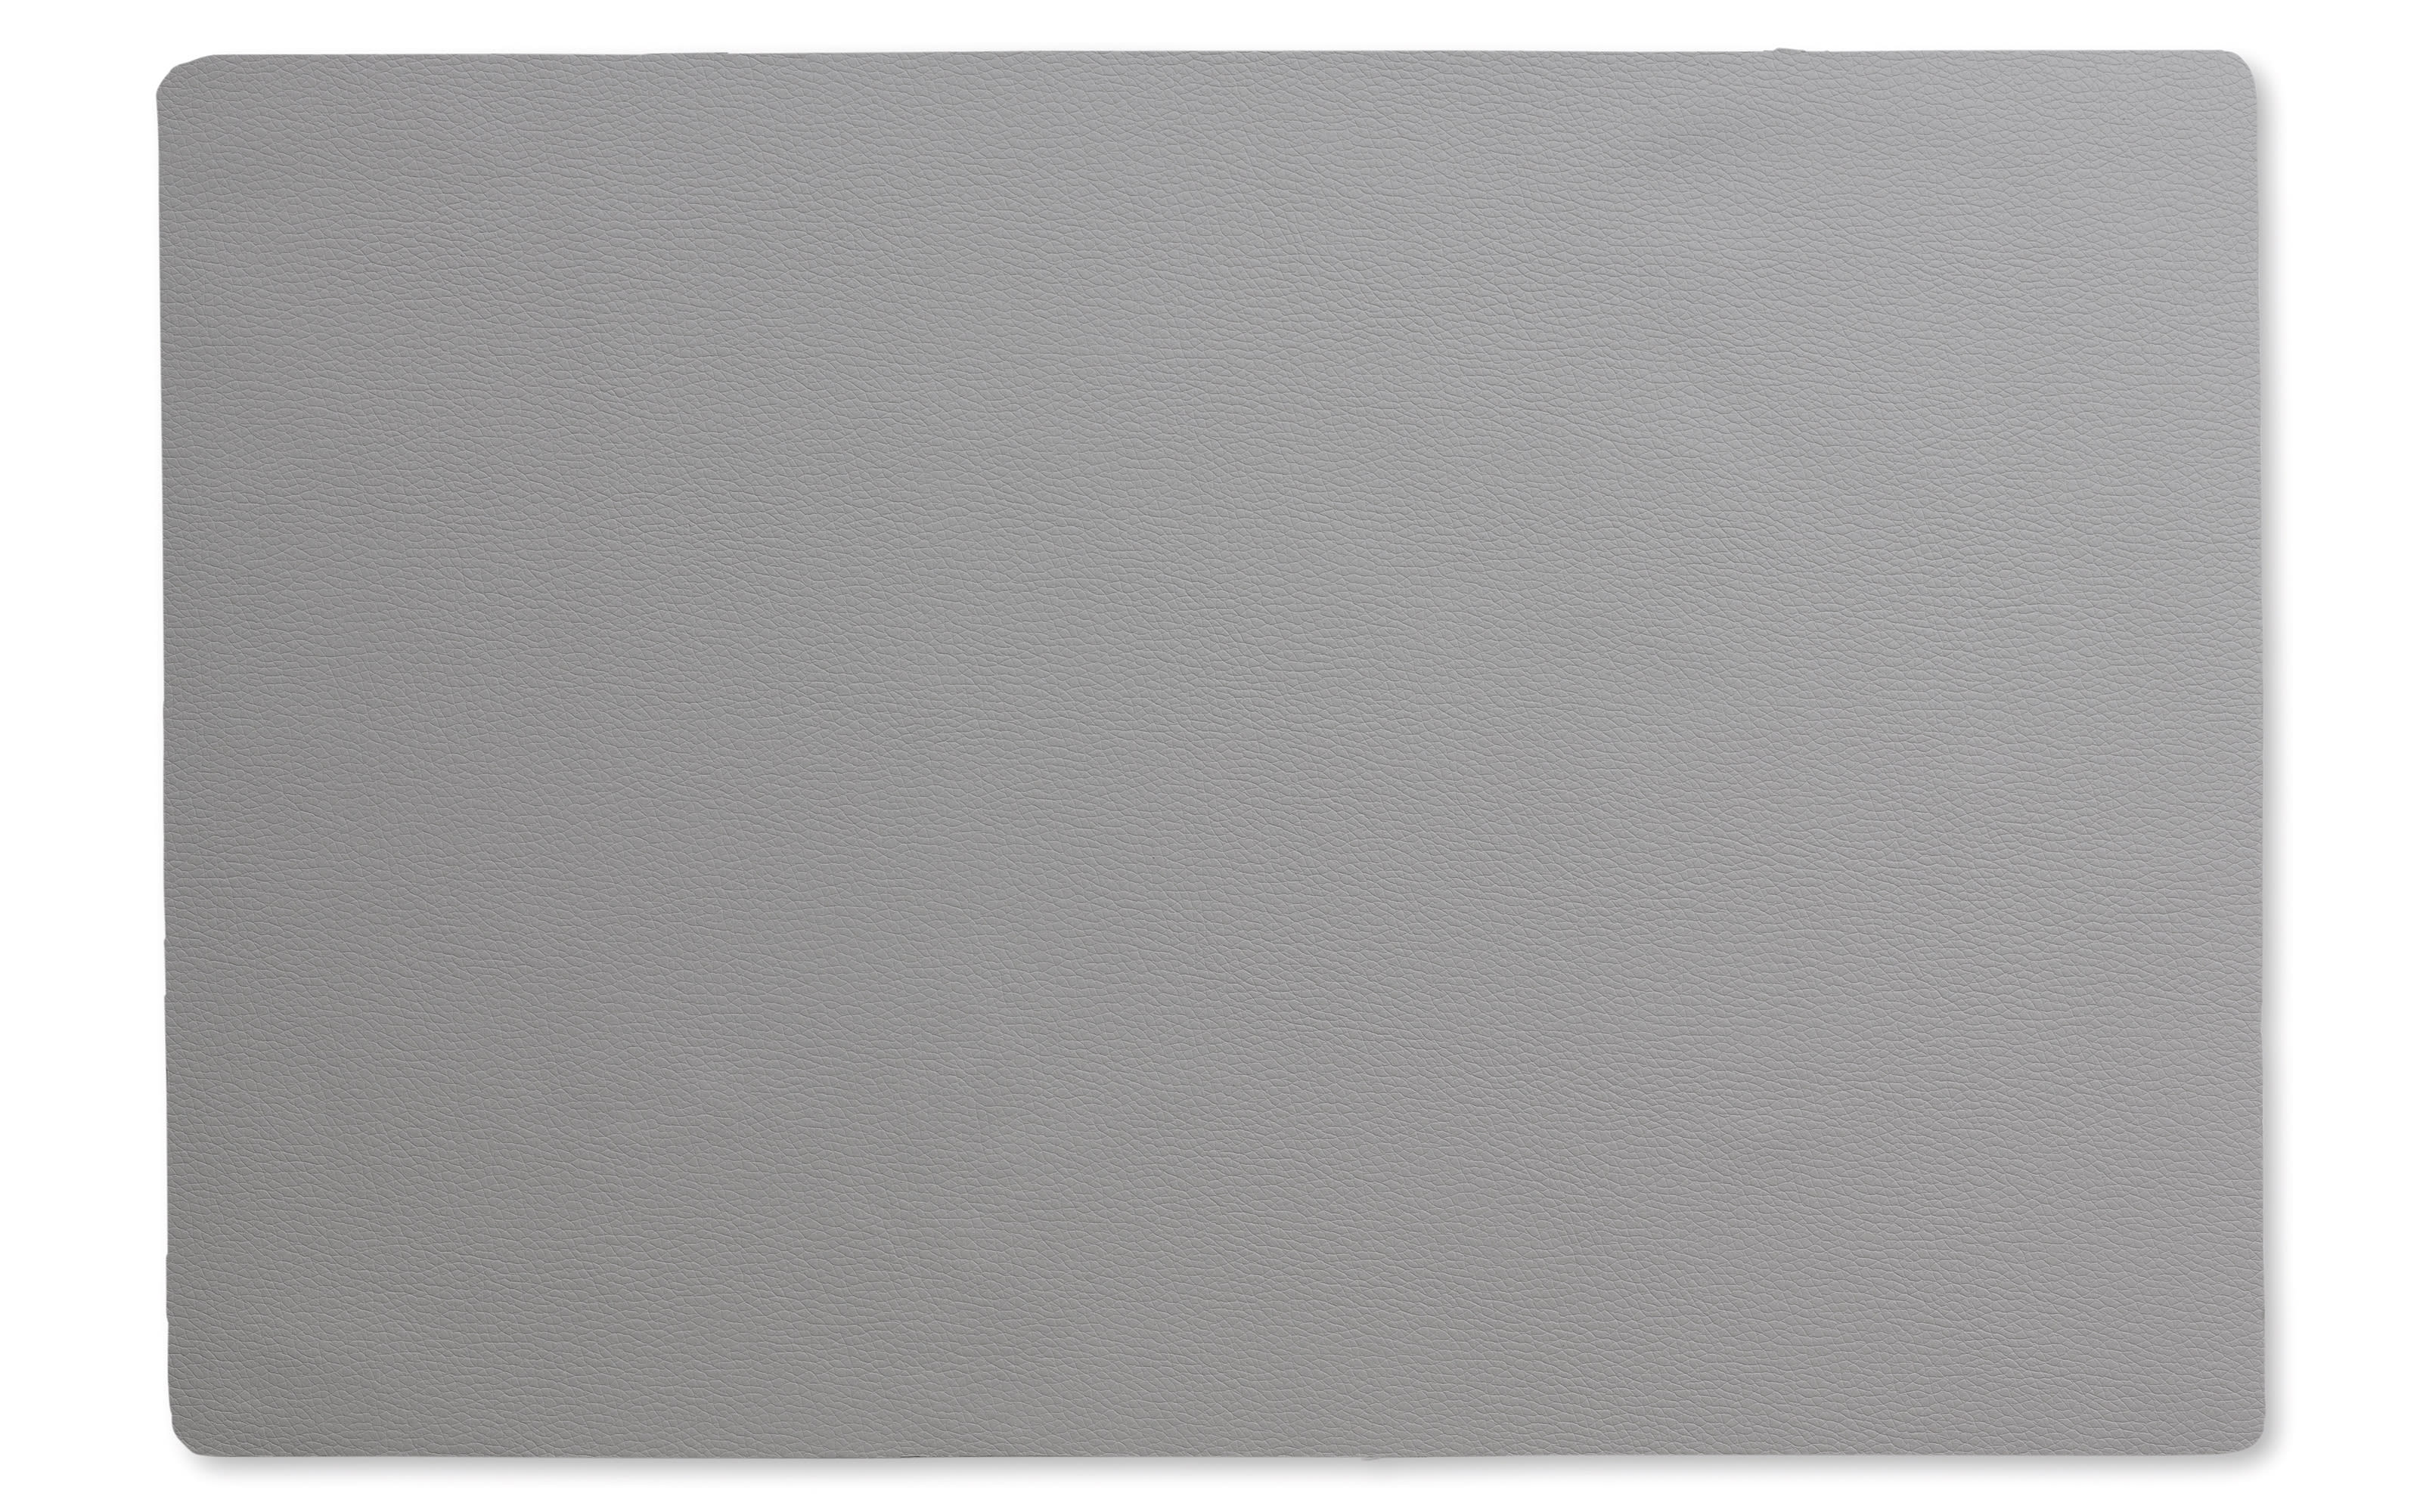 Tisch-Set Kimara in grau, 30 x 45 cm